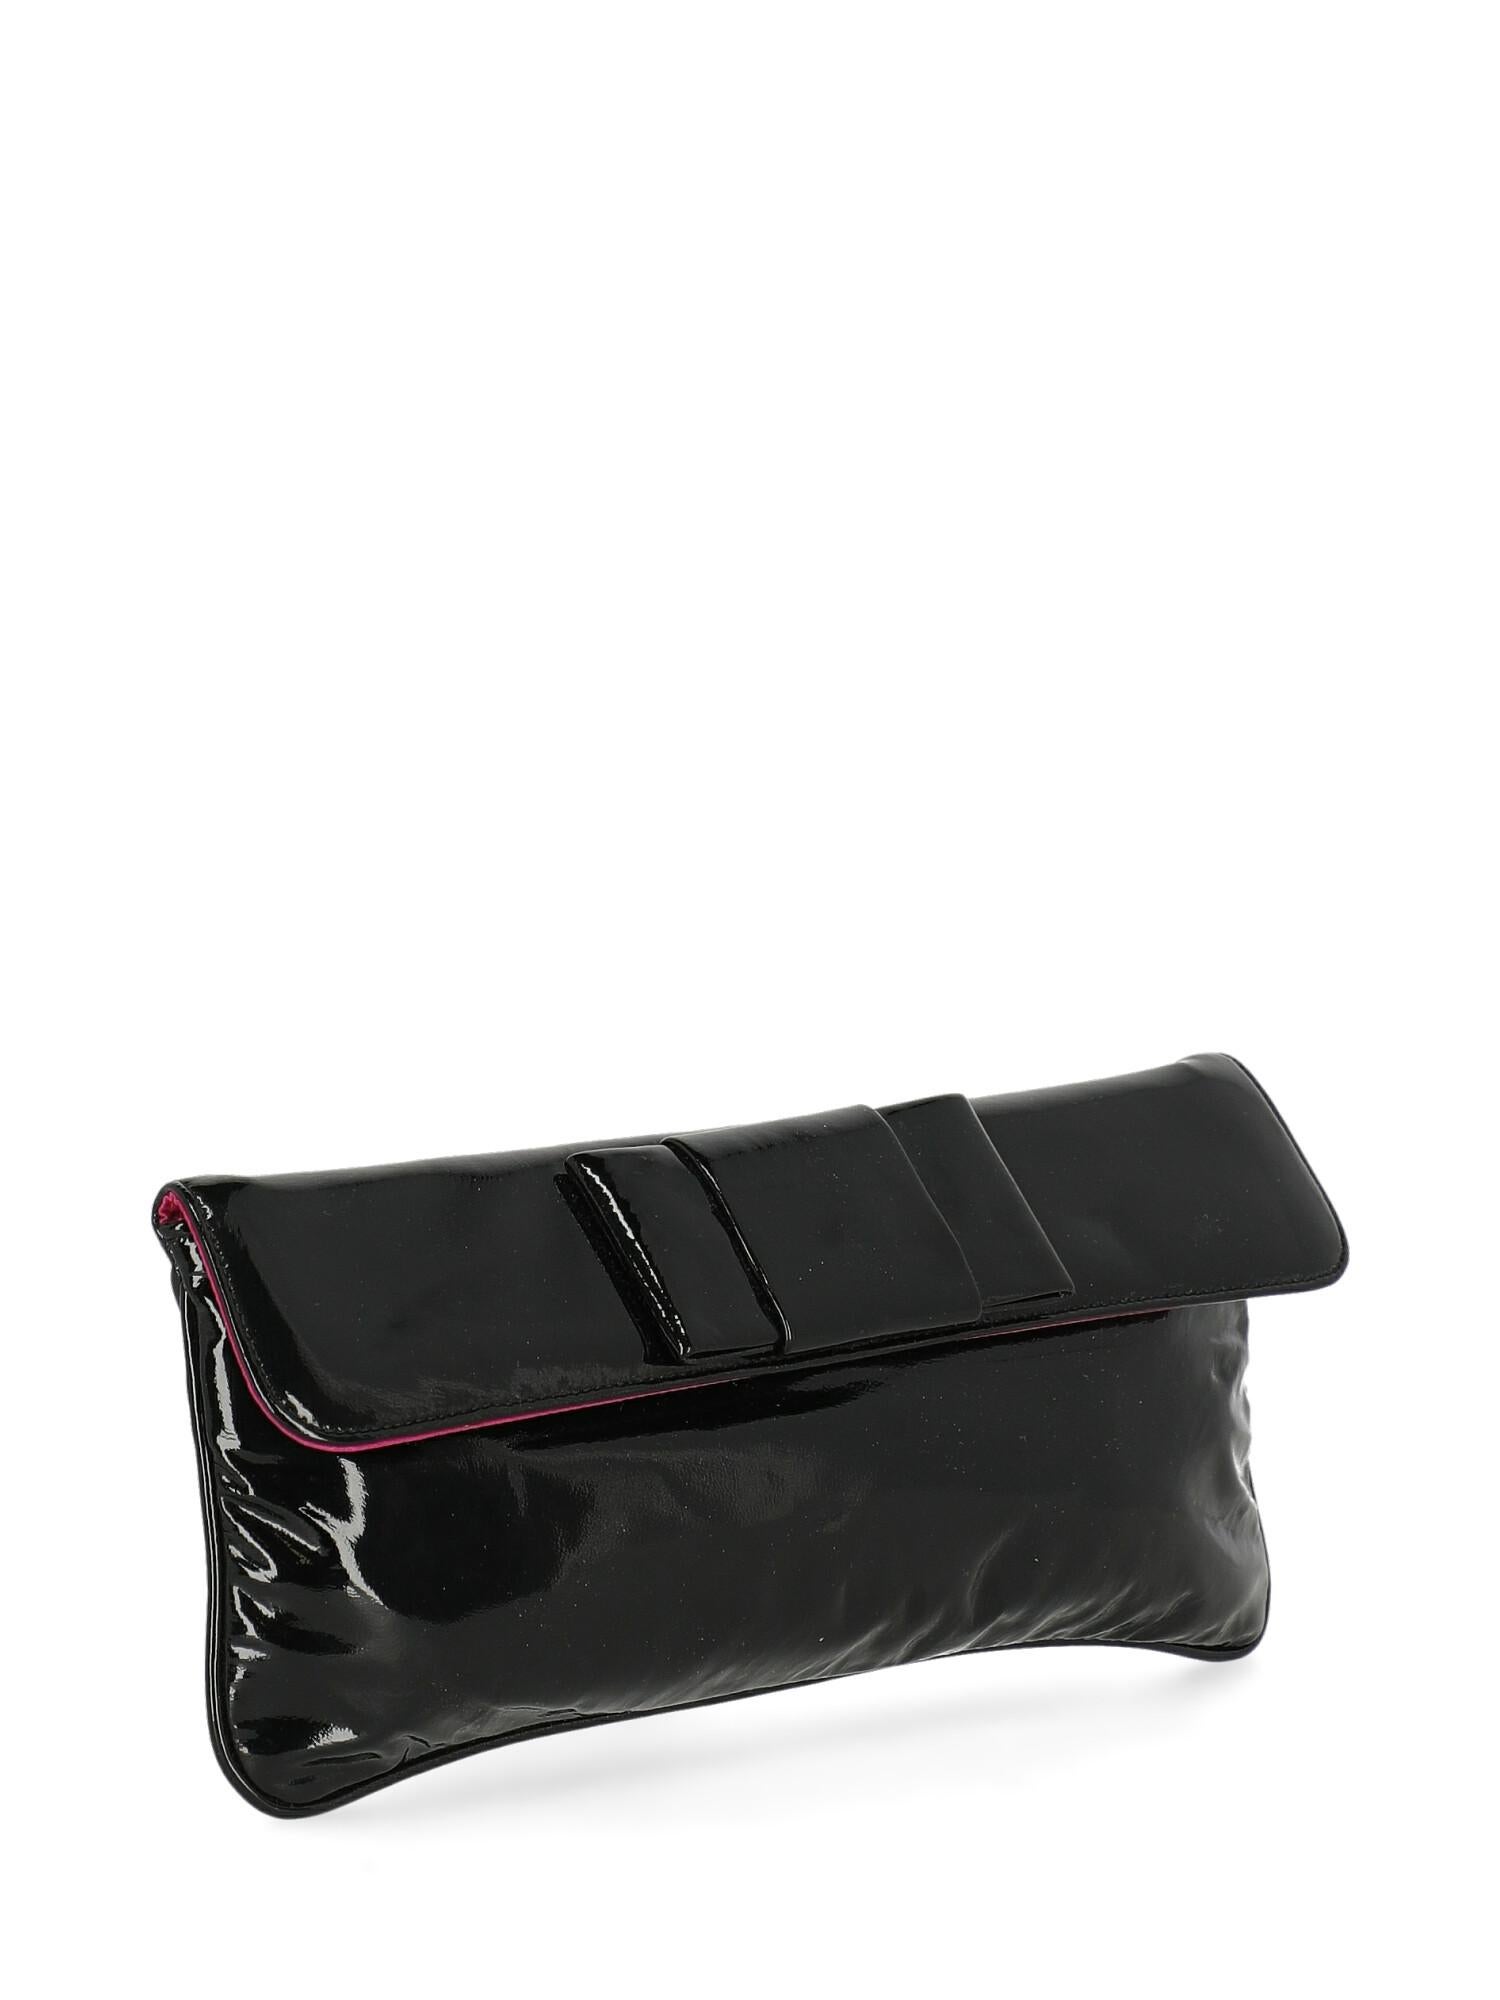 Miu Miu Woman Handbag  Black Leather In Good Condition For Sale In Milan, IT